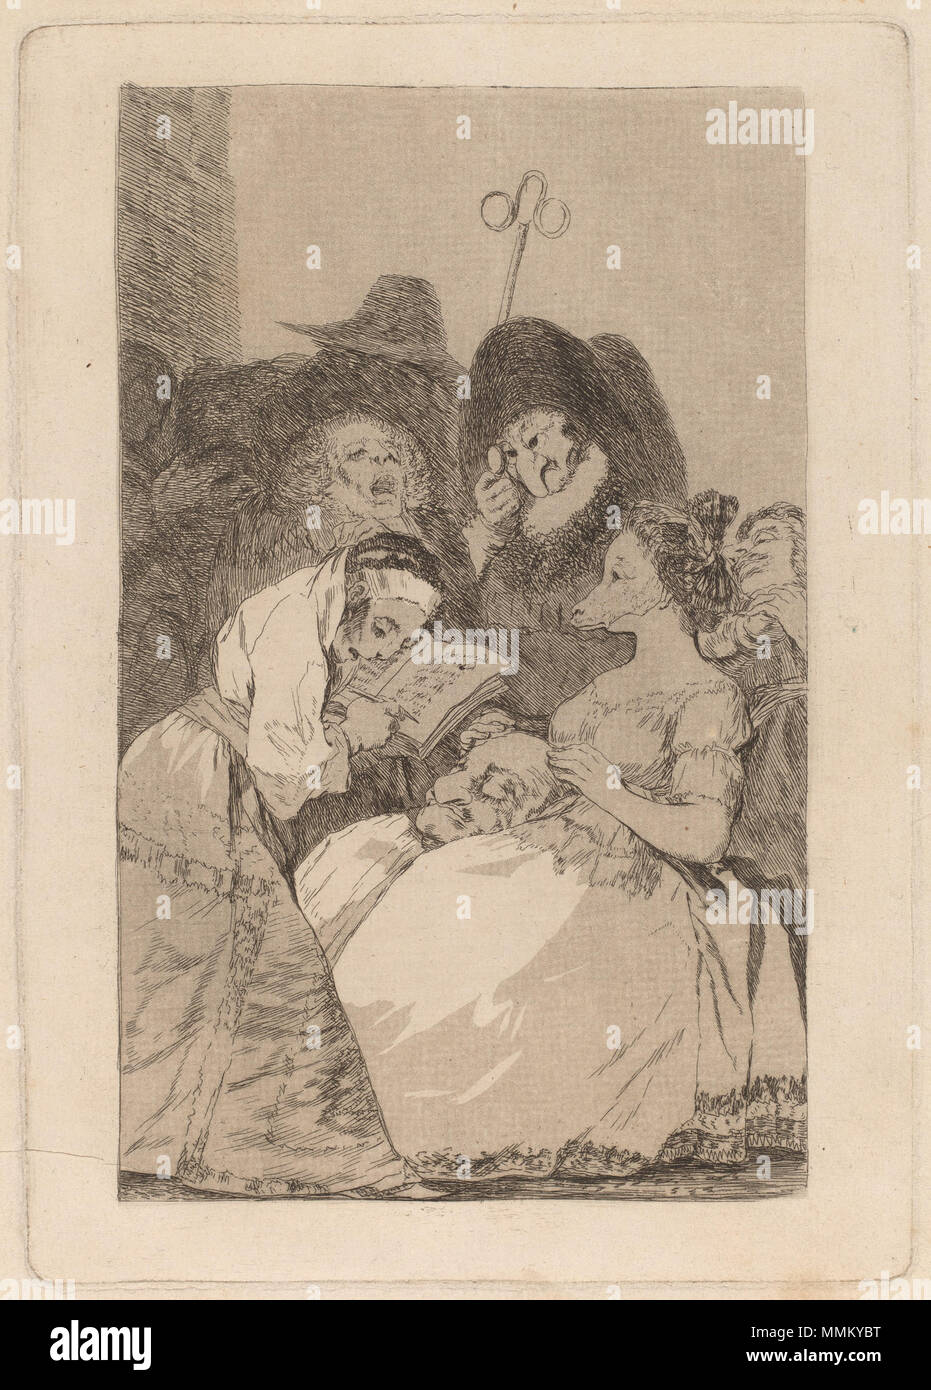 Francisco de Goya, La filiacion (Filiation), Spanisch, 1746 - 1828, in oder vor 1799, Radierung und Aquatinta [arbeiten Beweis], Rosenwald Collection Goya - La filiacion (Filiation) Stockfoto